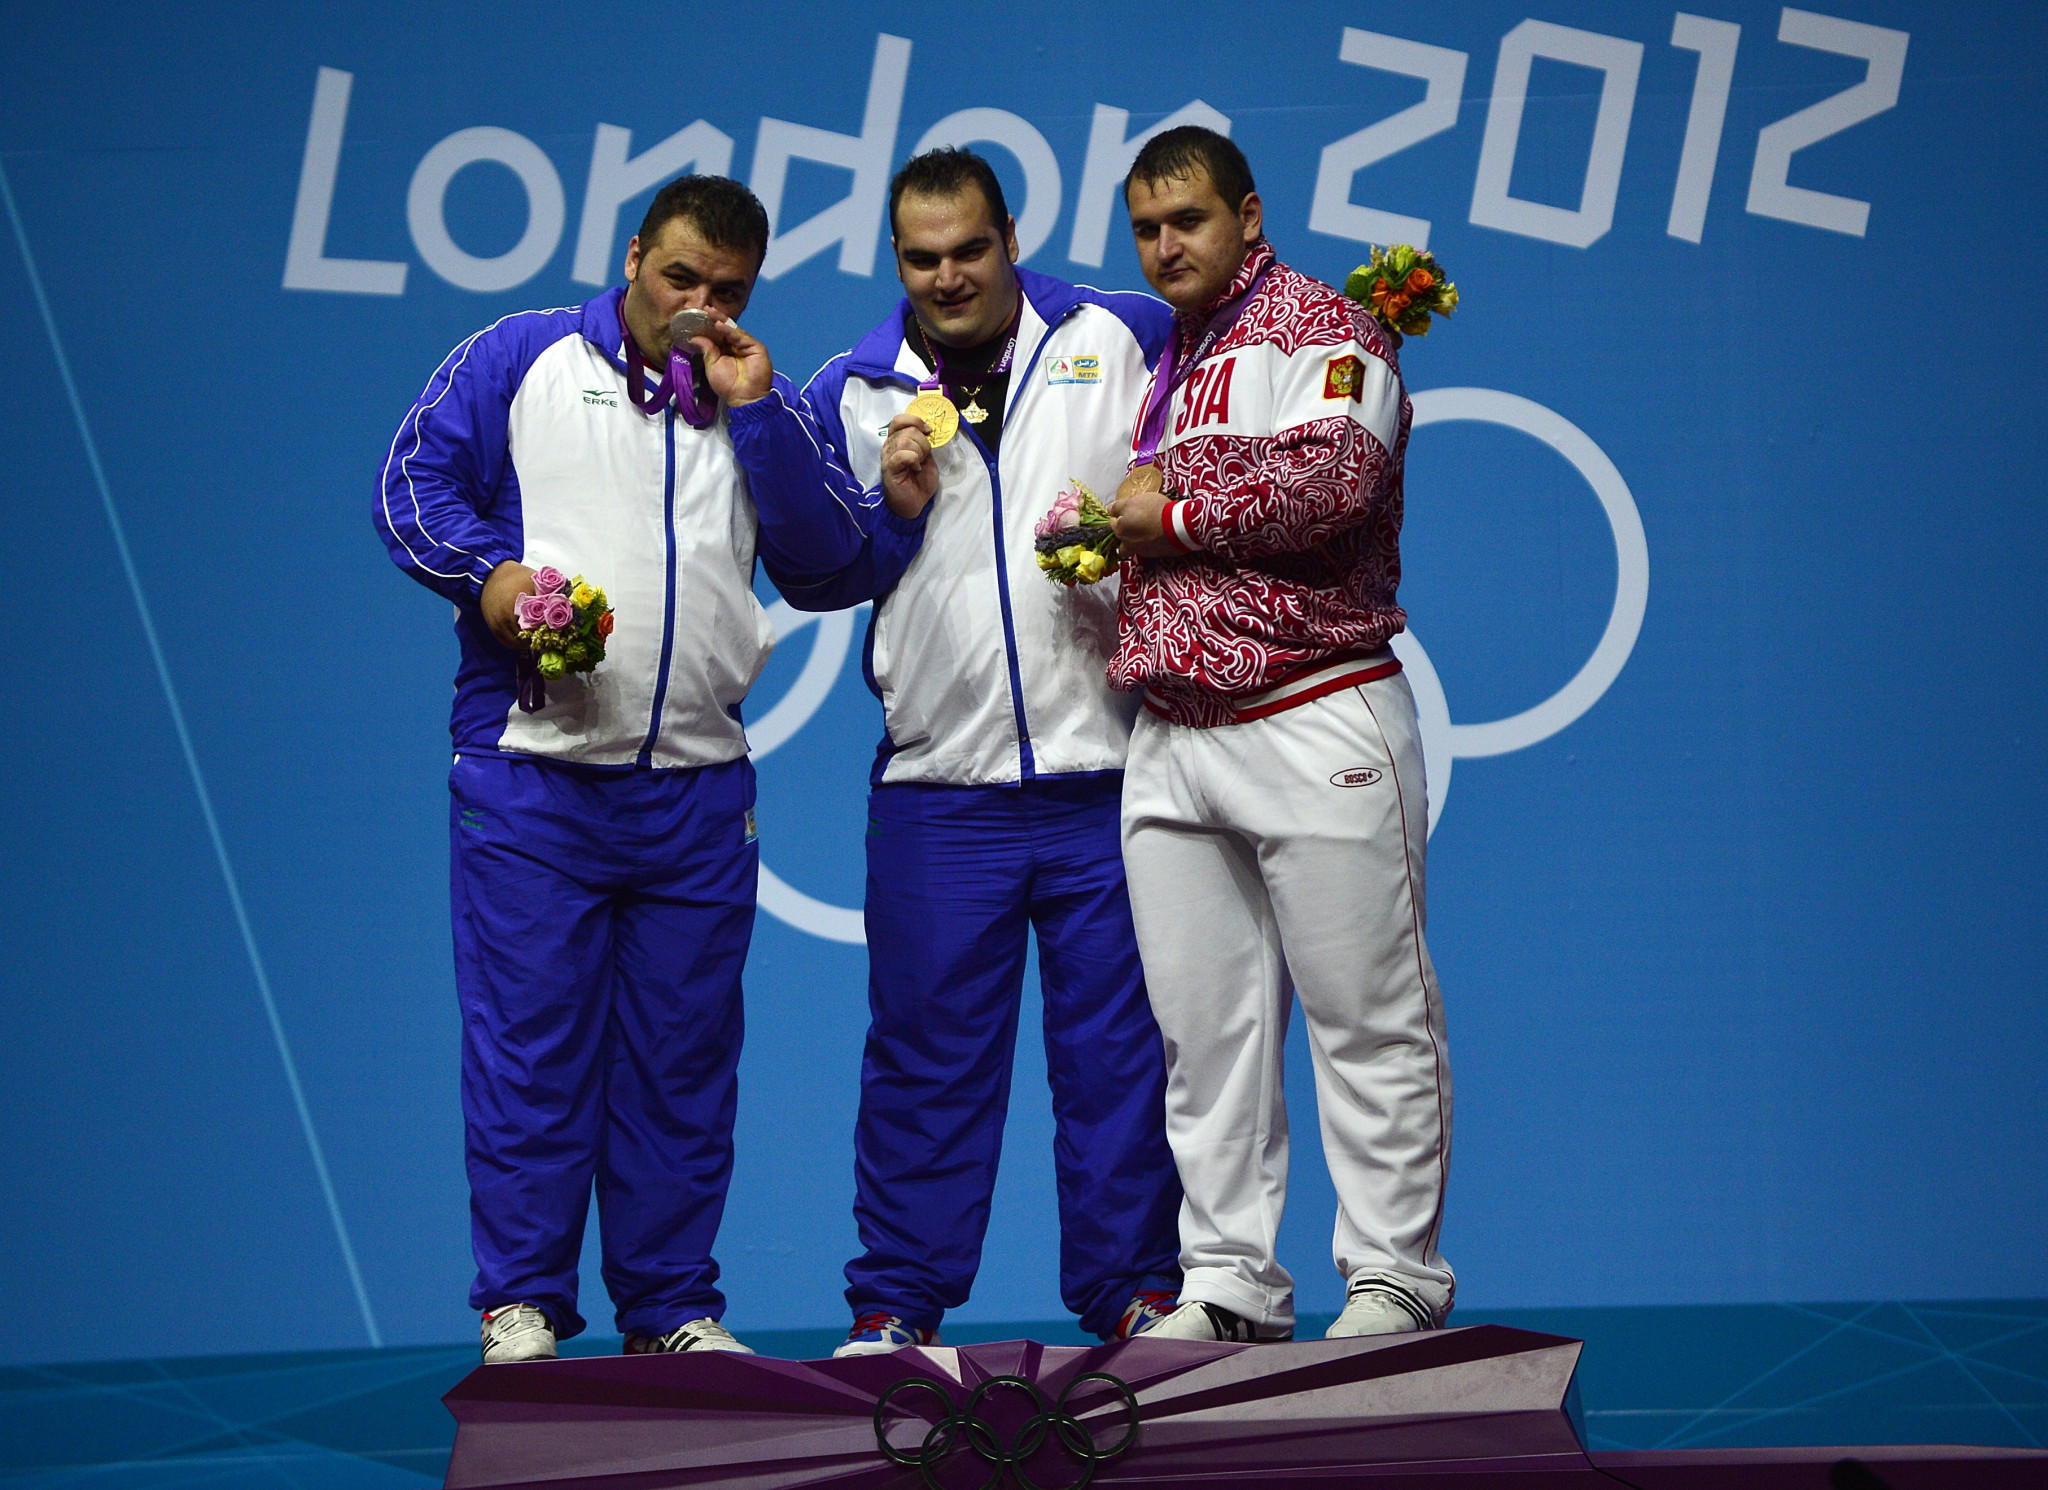 Ruslan Albegov, a destra, ha vinto una medaglia di bronzo a Londra 2012 ©Getty Images